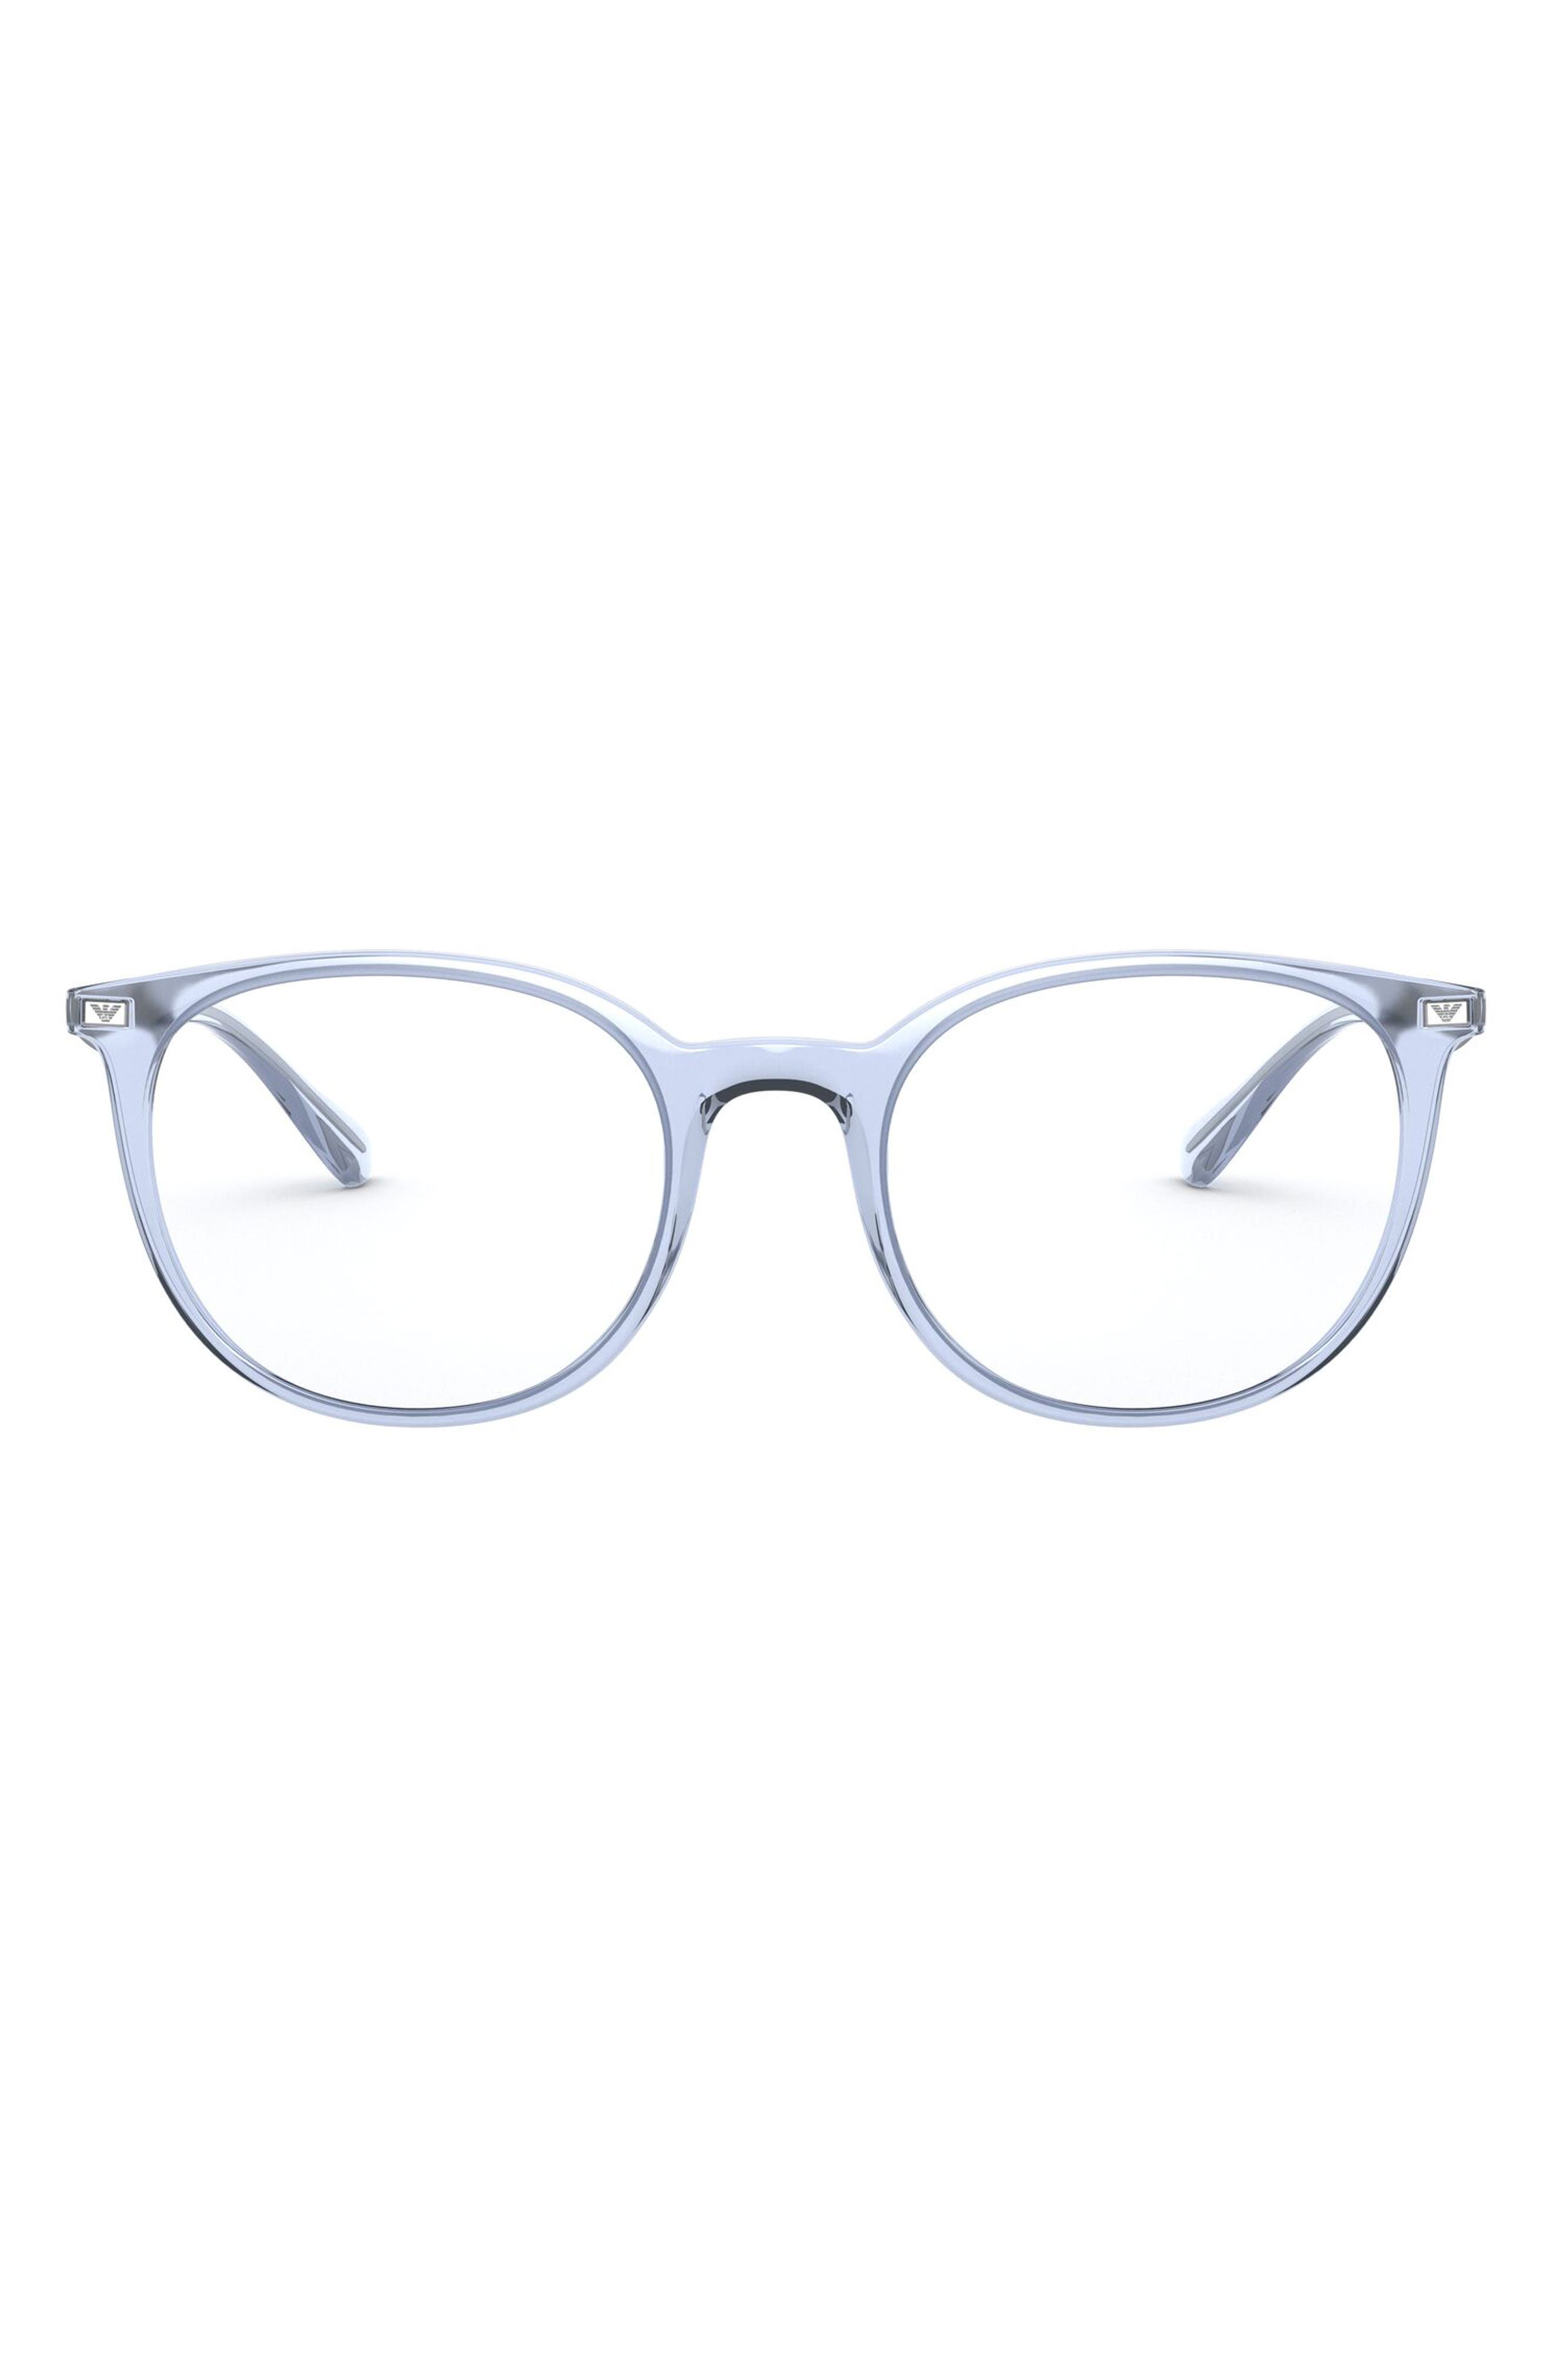 Emporio Armani 52mm Round Optical Glasses in Shiny Transparent Blue